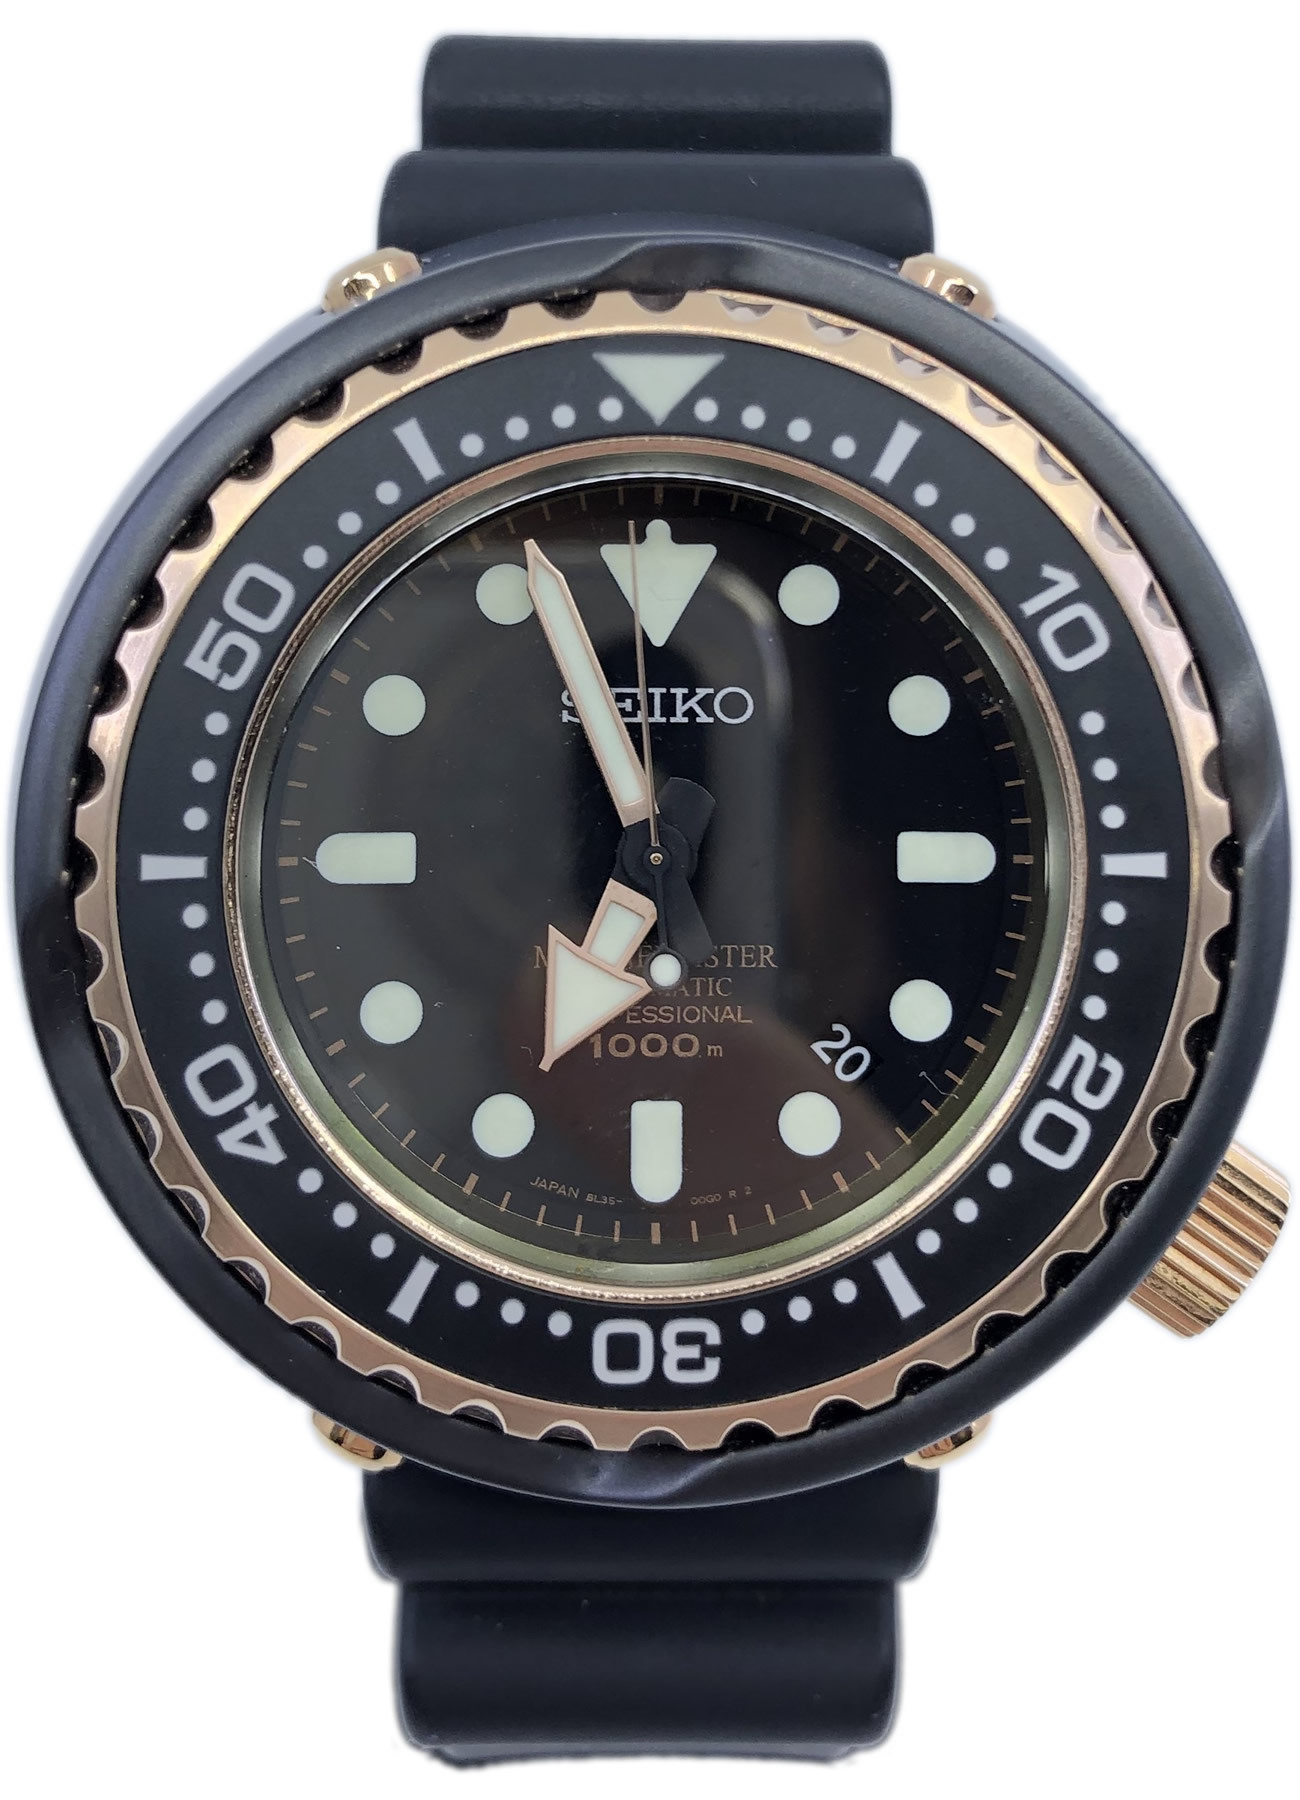 Seiko Prospex Marine Master 1000M Tuna Can Automatic SBDX014 - Exquisite  Timepieces